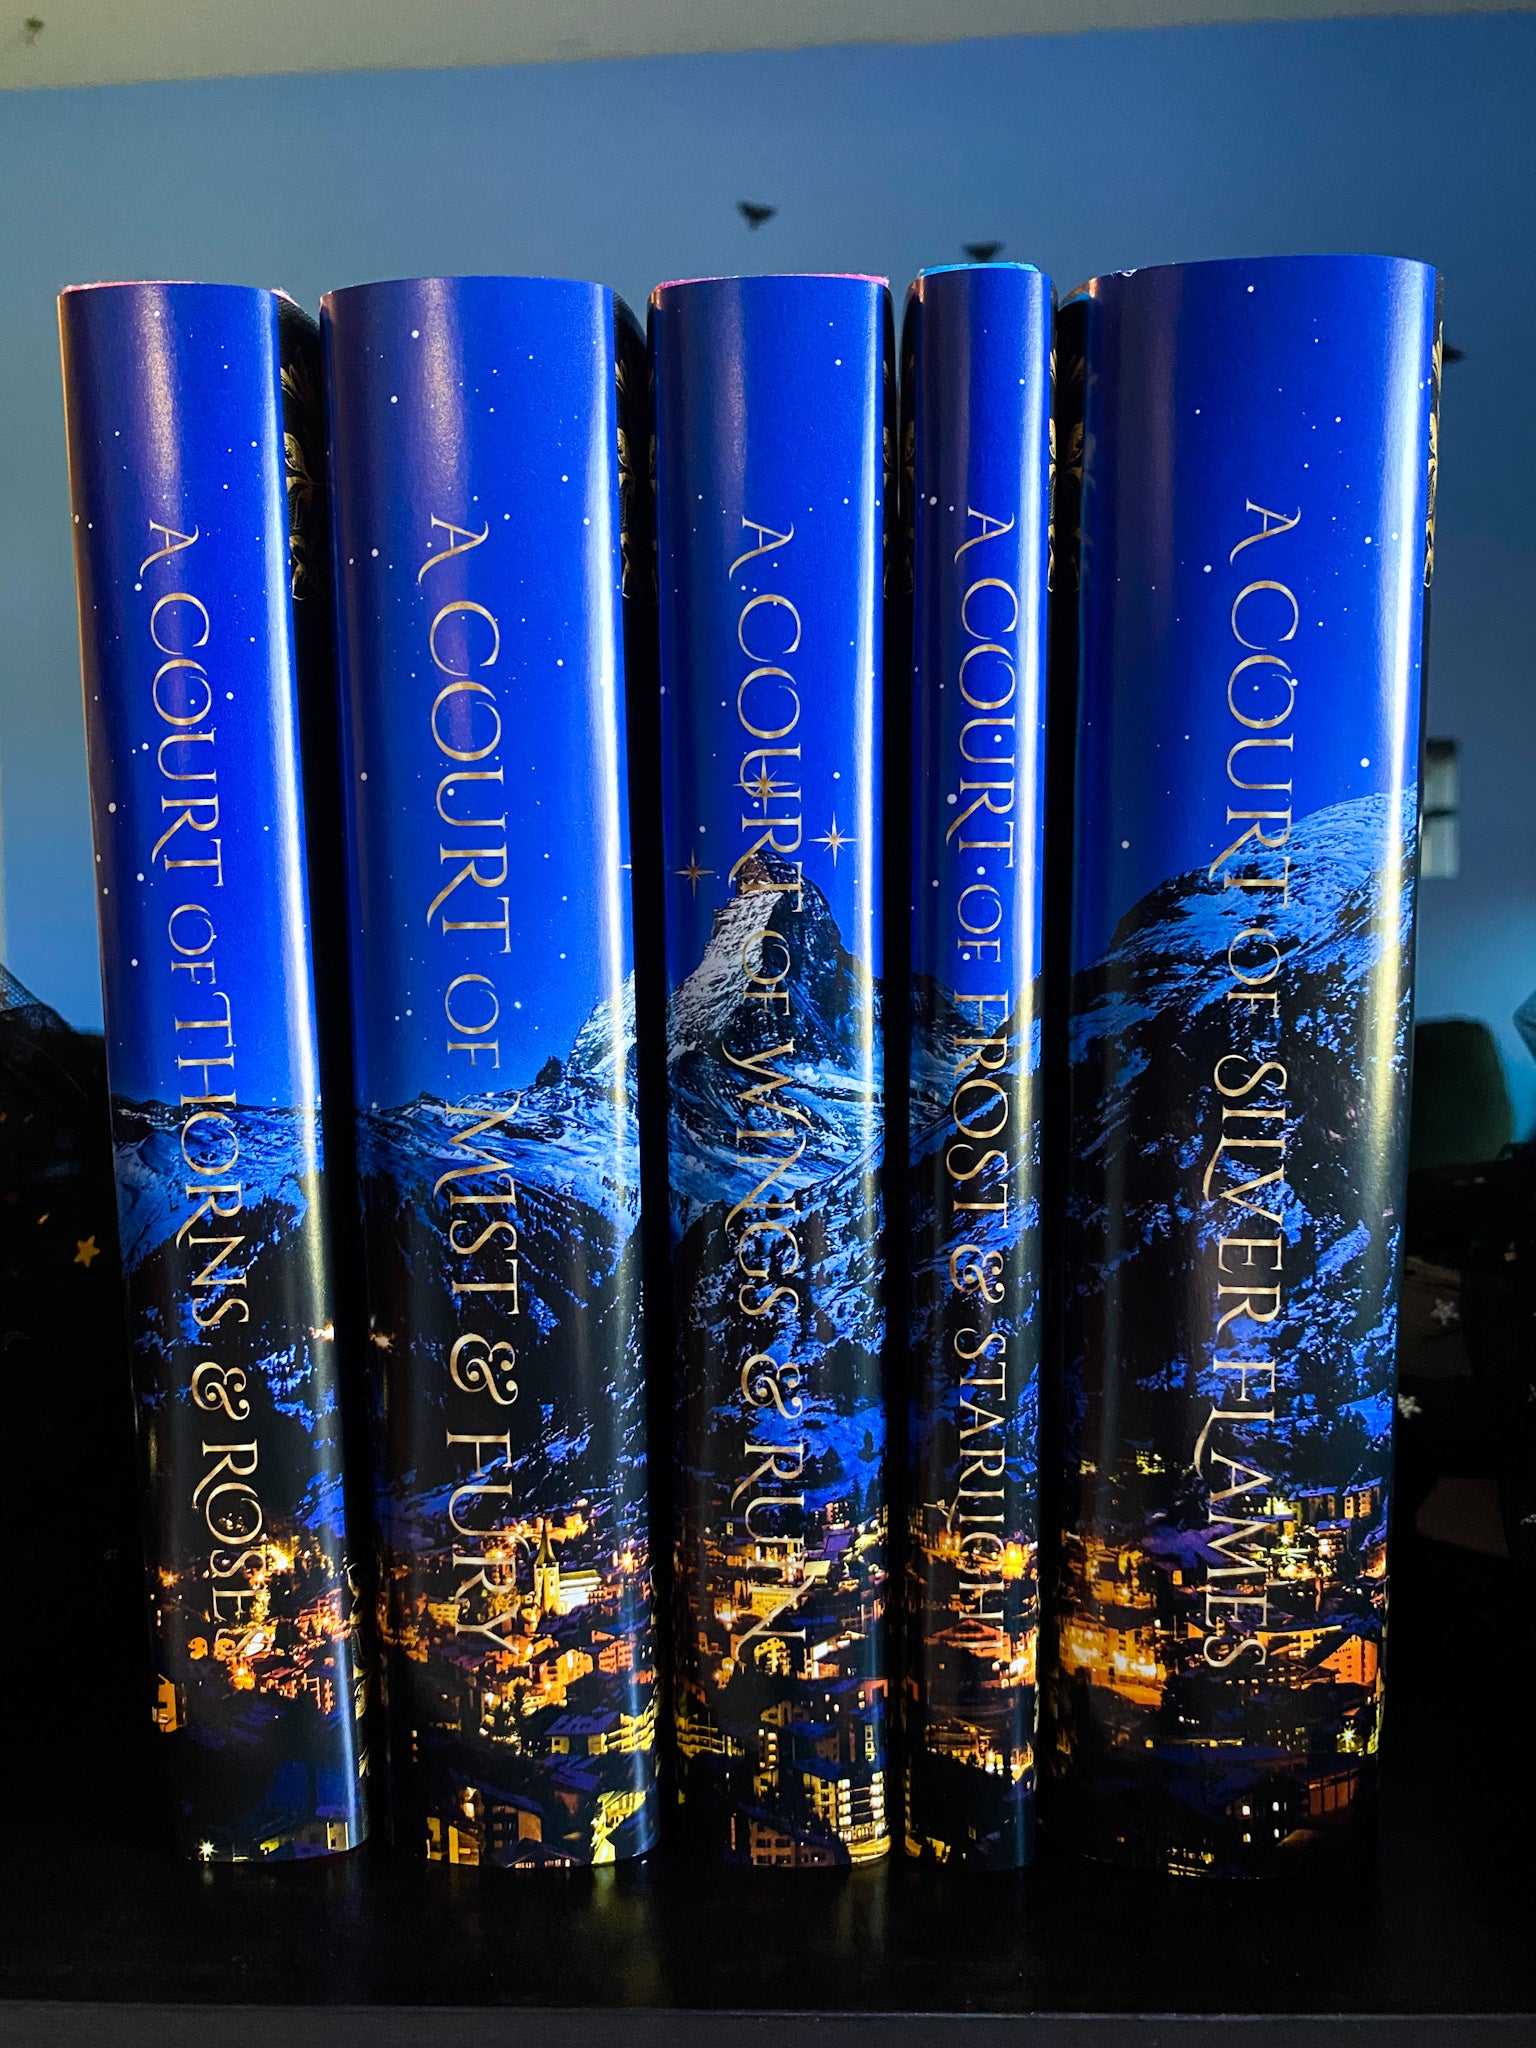 Velaris X ACOTAR Special Edition Book Box Set with Velaris Printed